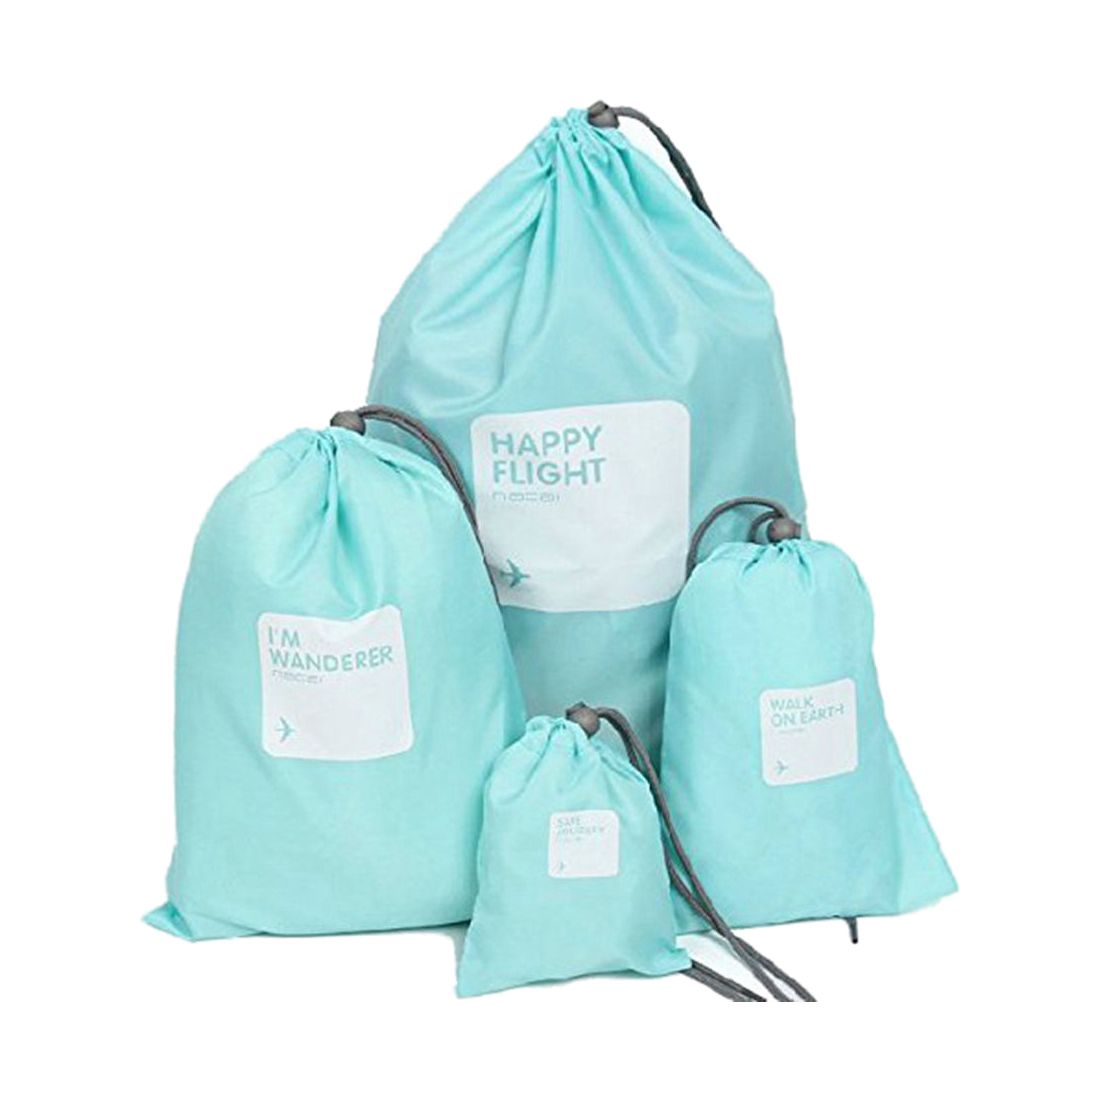 Four Sets Backpack Women Animal Owl Printing Backpack Canvas Bookbags School Backpacks Bags for Teenage girls Bagpack Backbag - ebowsos